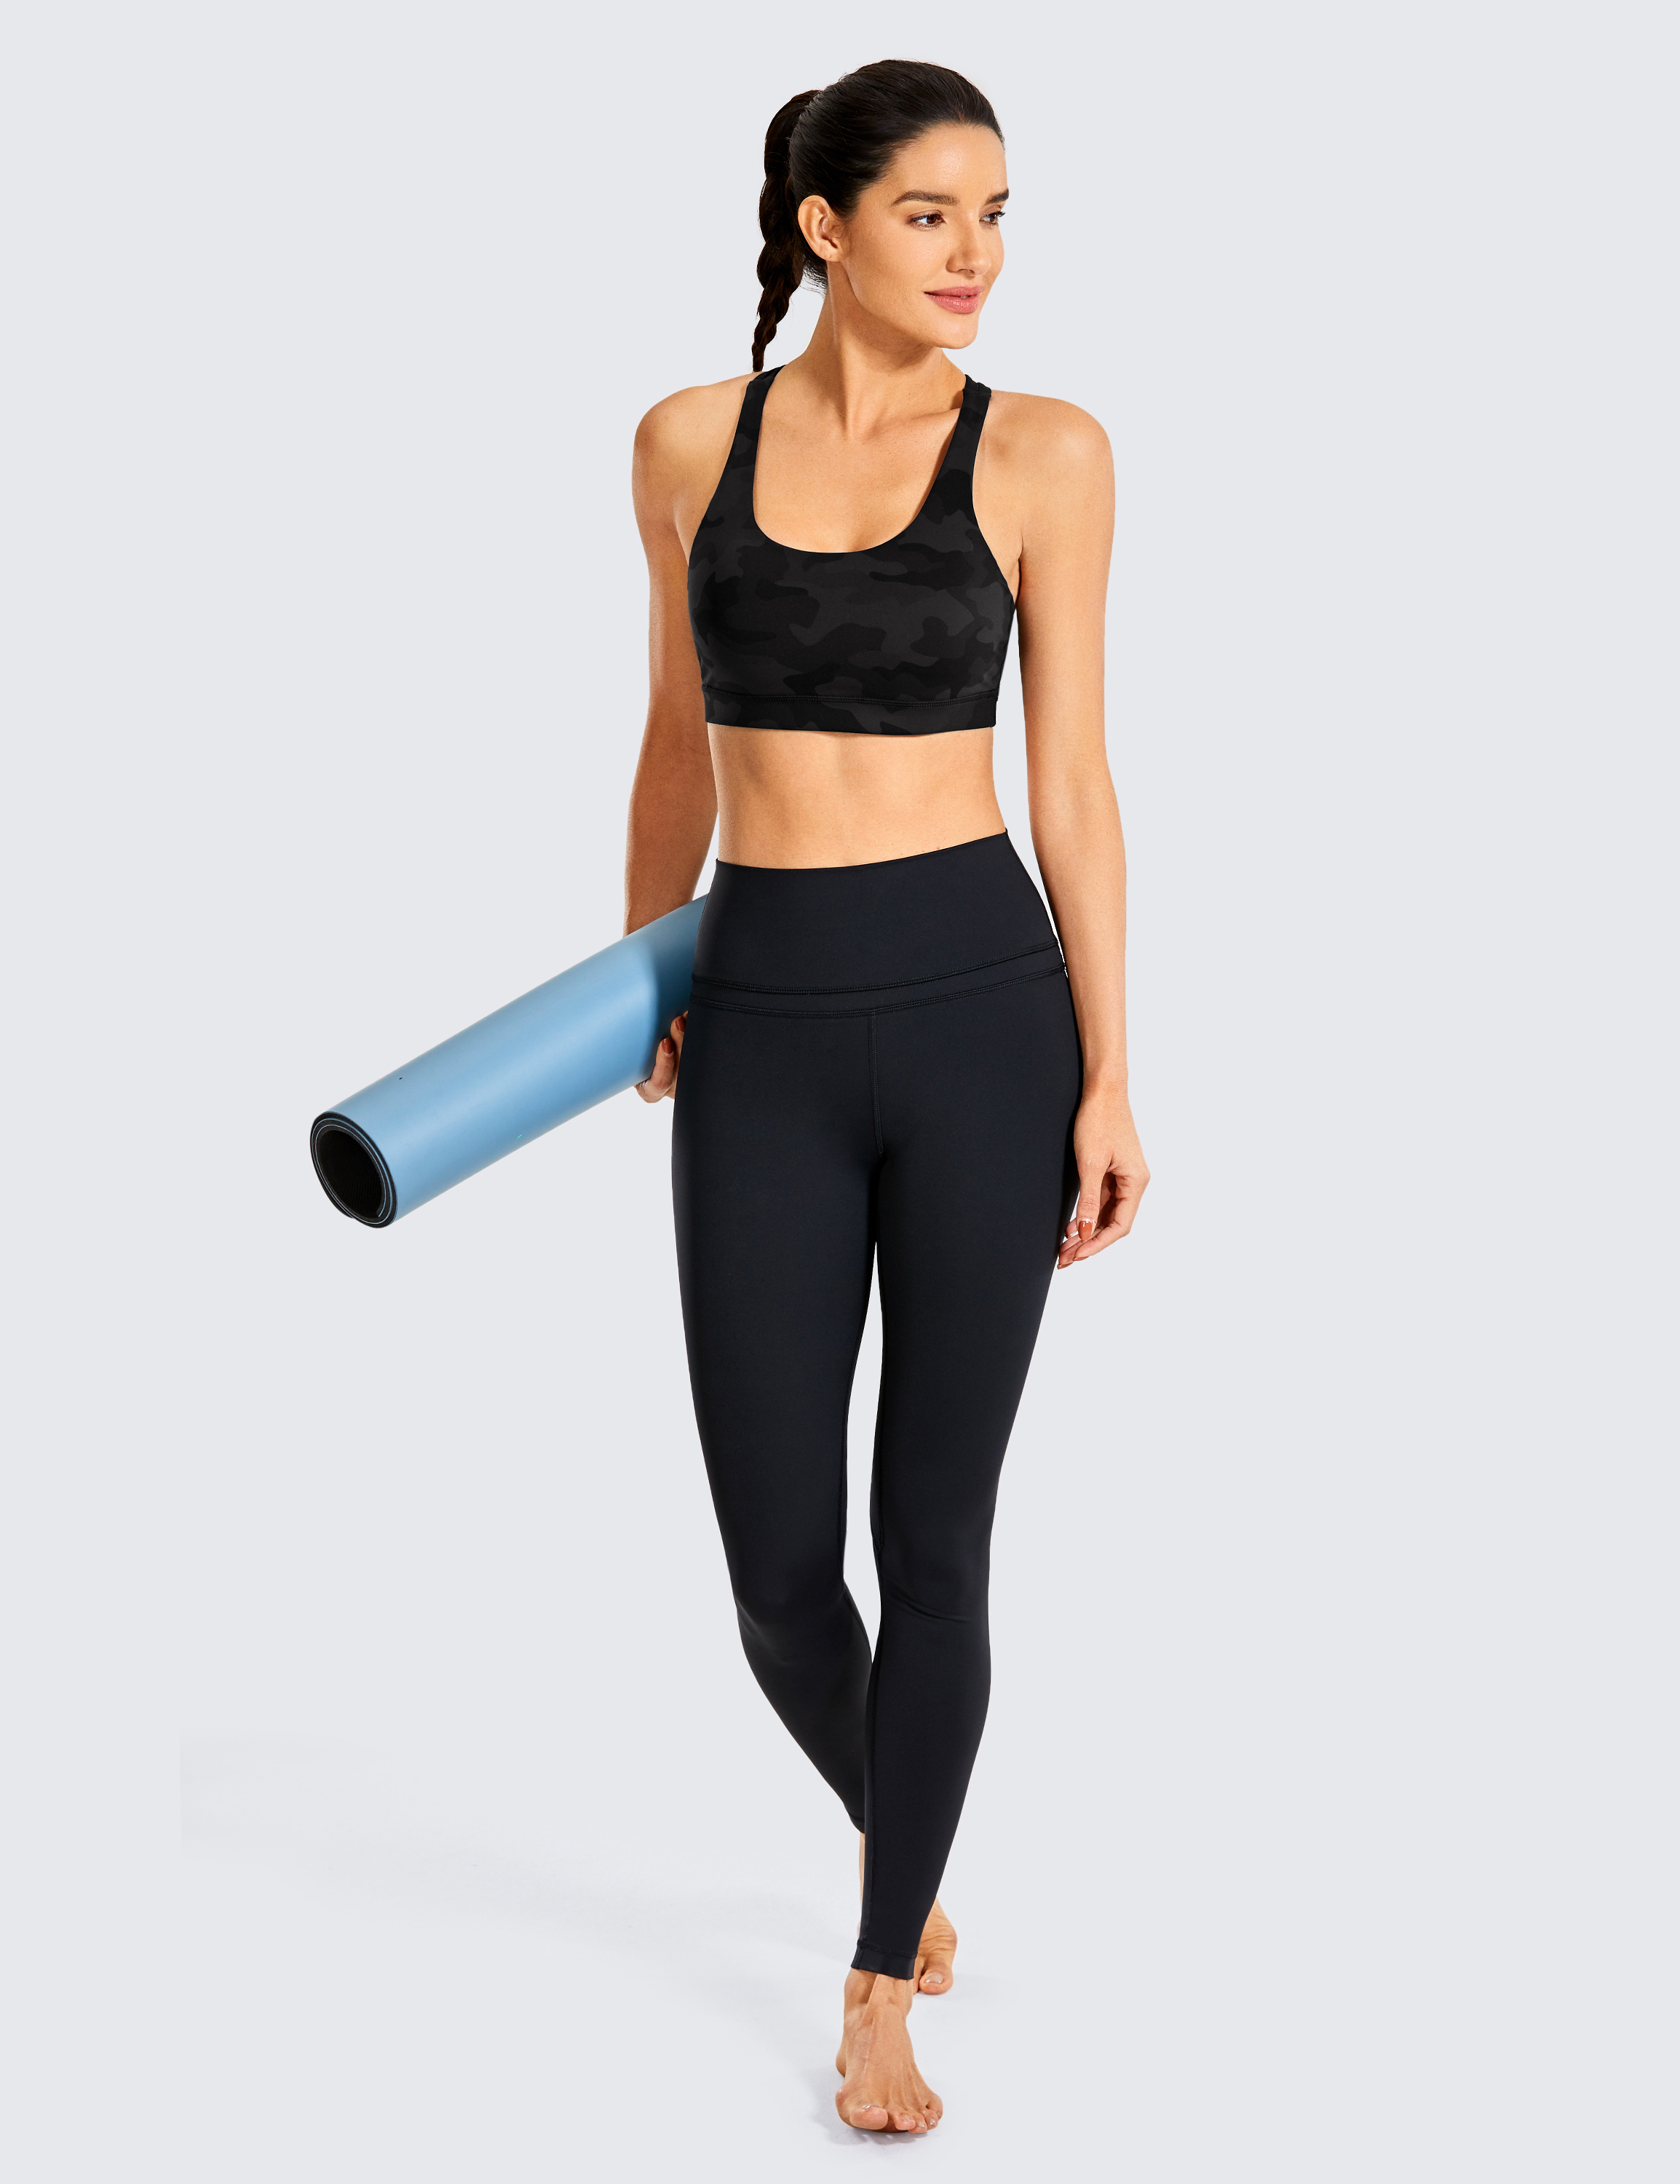 Women's Strappy Back Wirefree Padded Workout Yoga Sports Bra | eBay